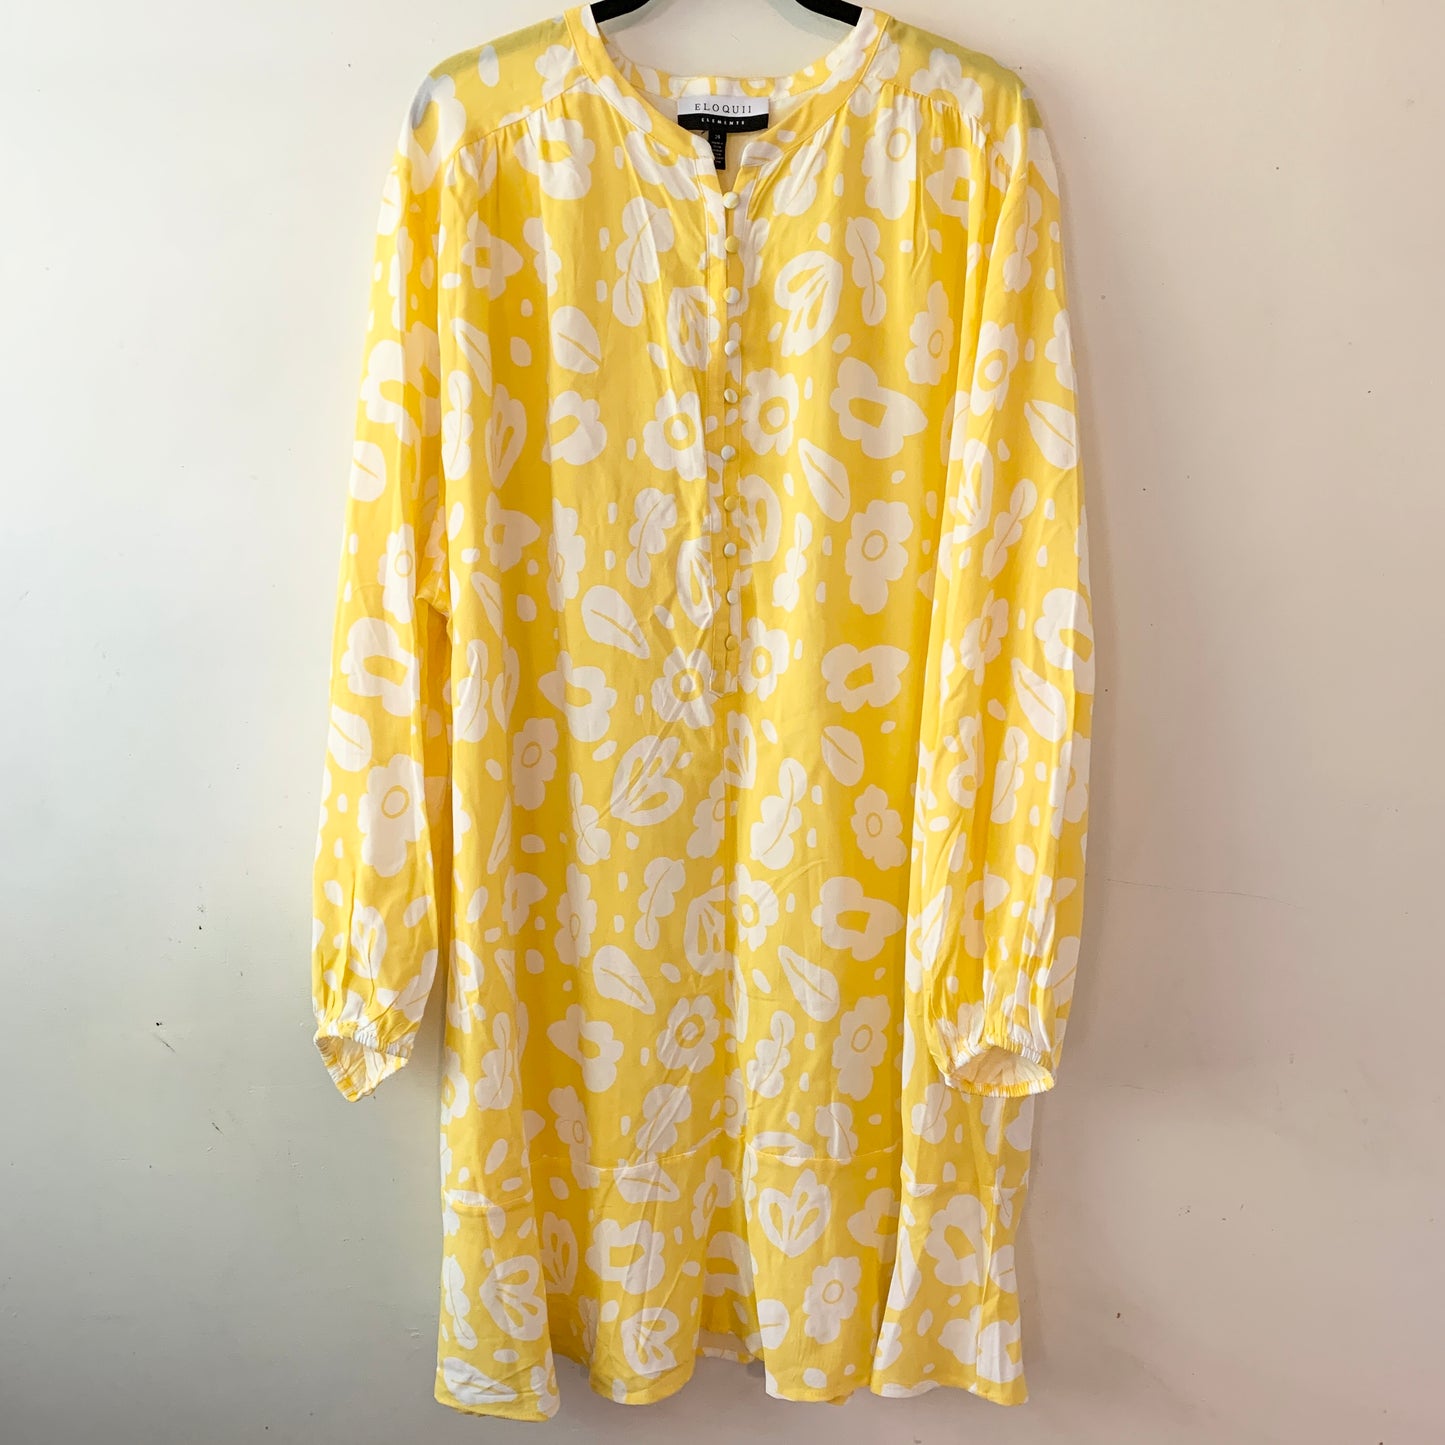 Eloquii Elements Stencil Print Yellow White Floral Shift Dress Size 24